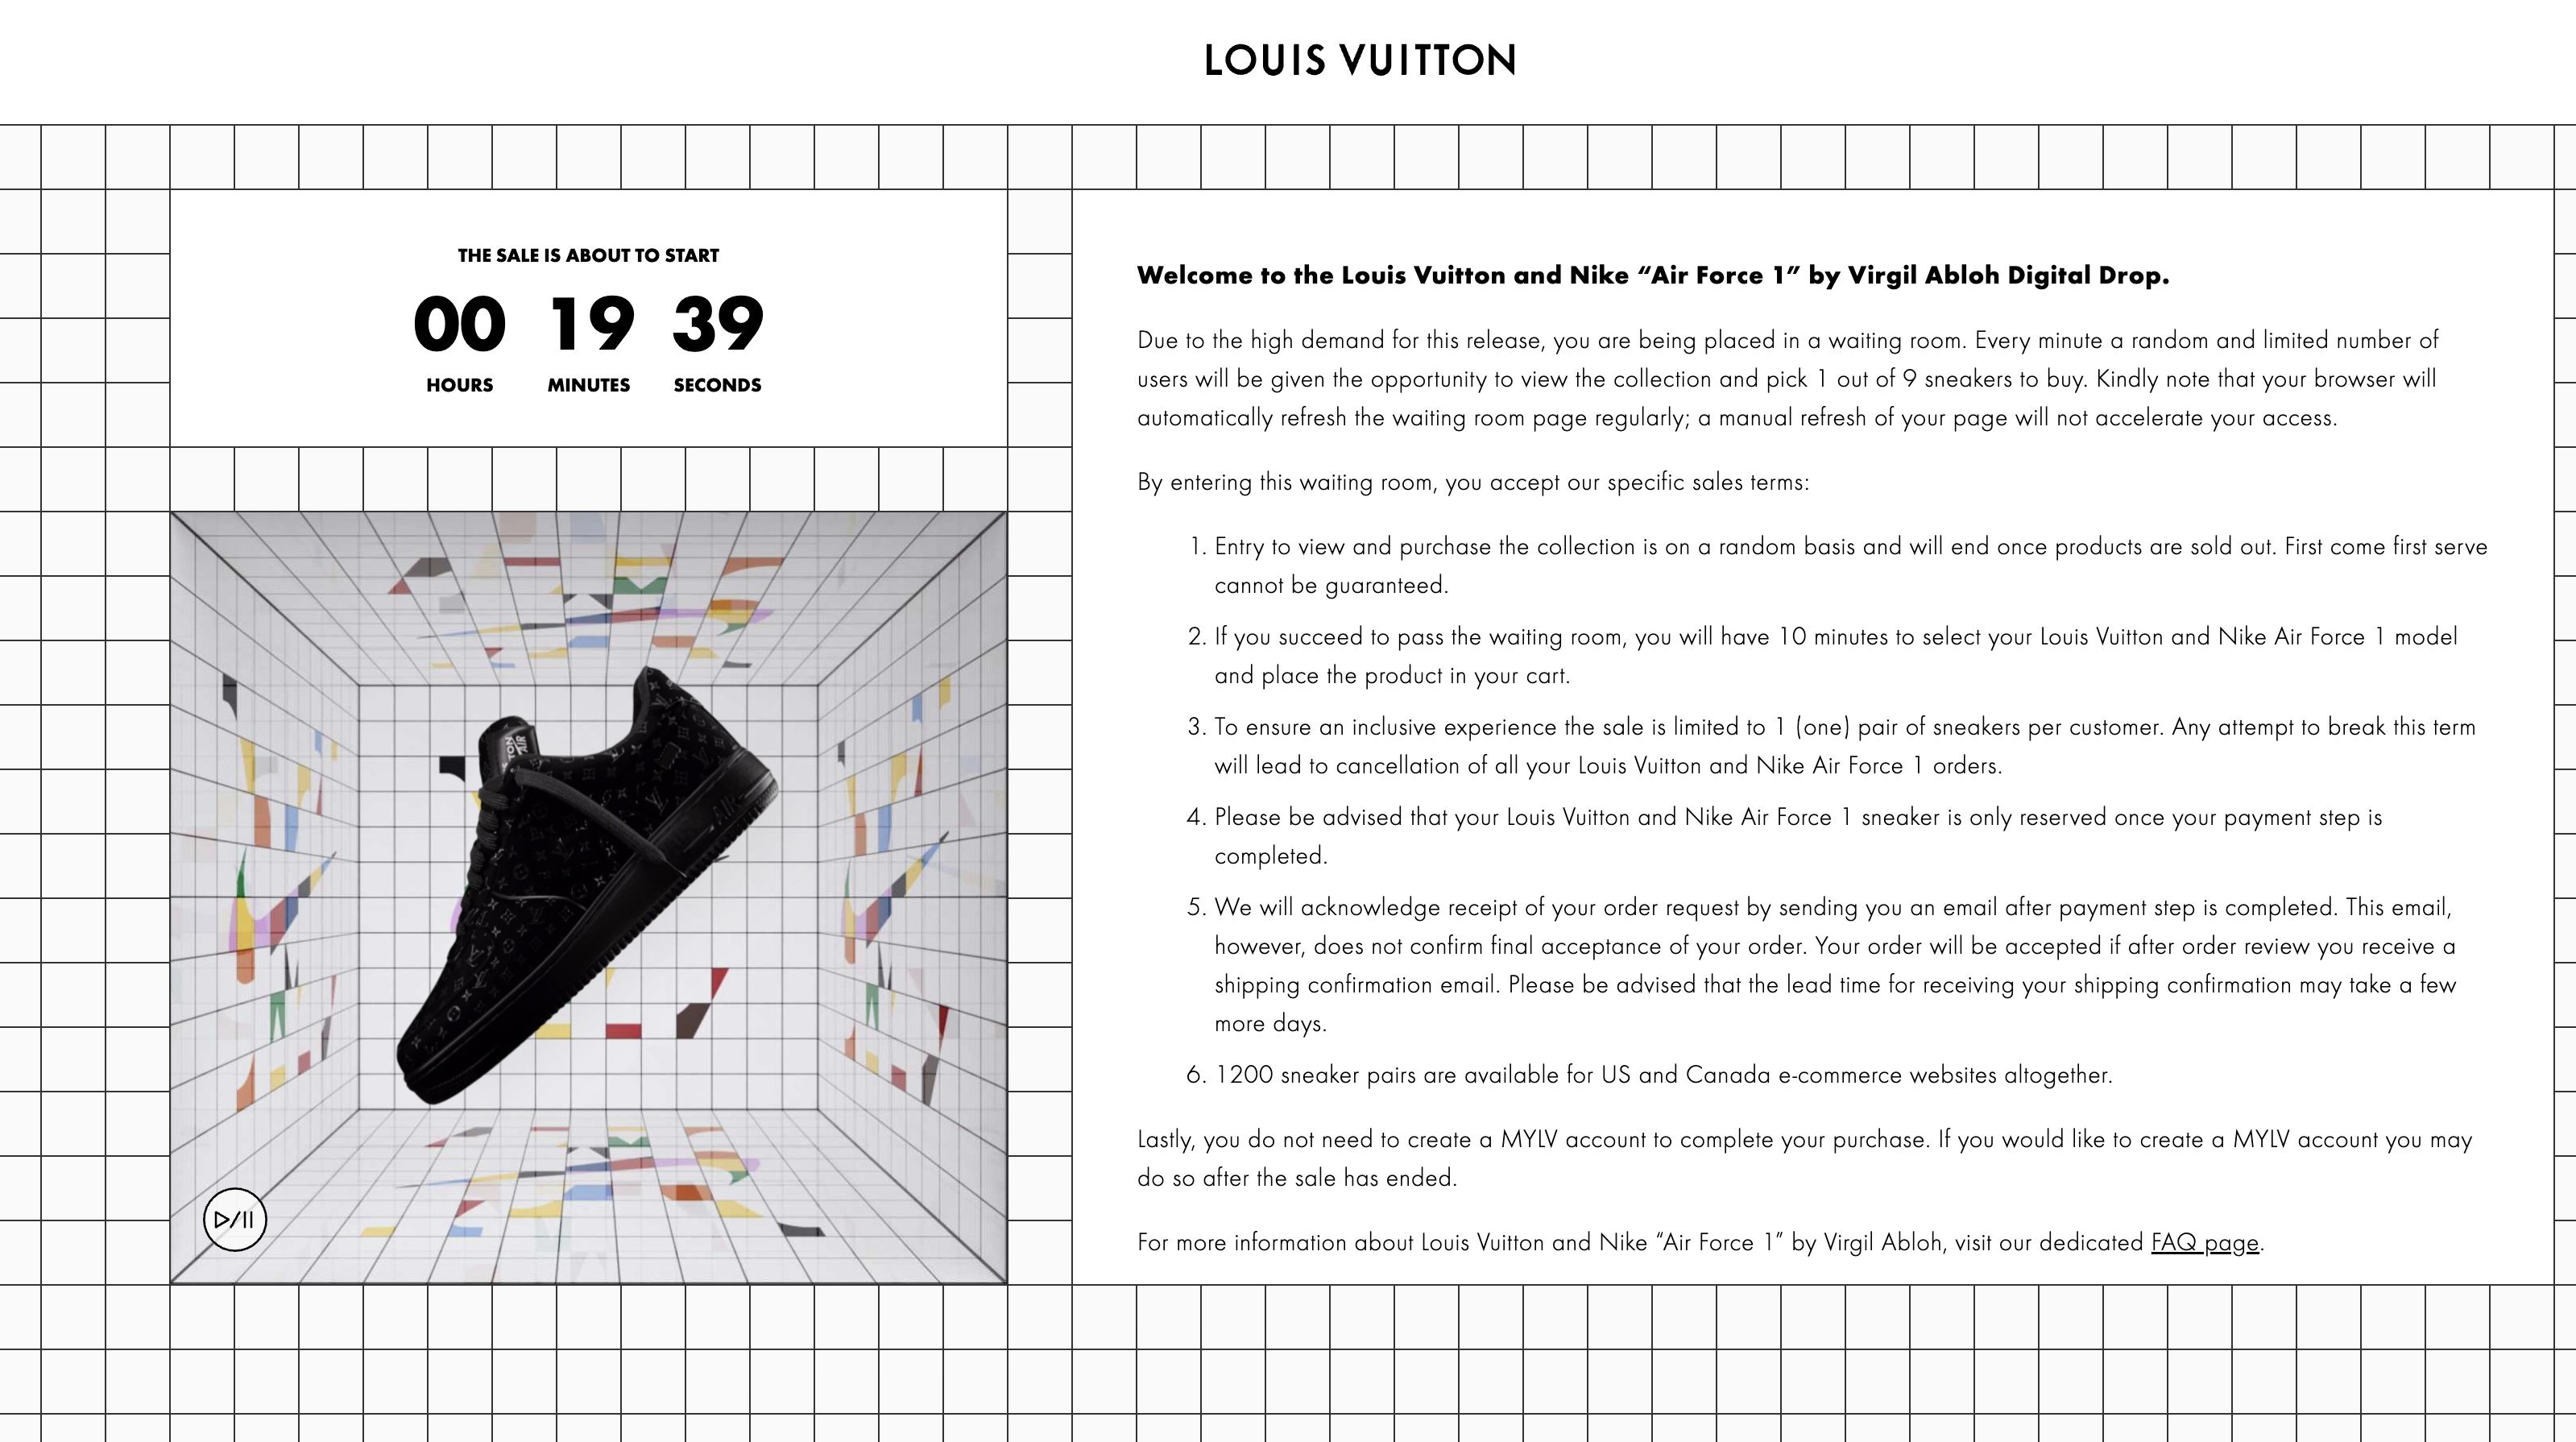 sockjig on X: 20. Louis Vuitton's fake AF1 drop Had a public drop